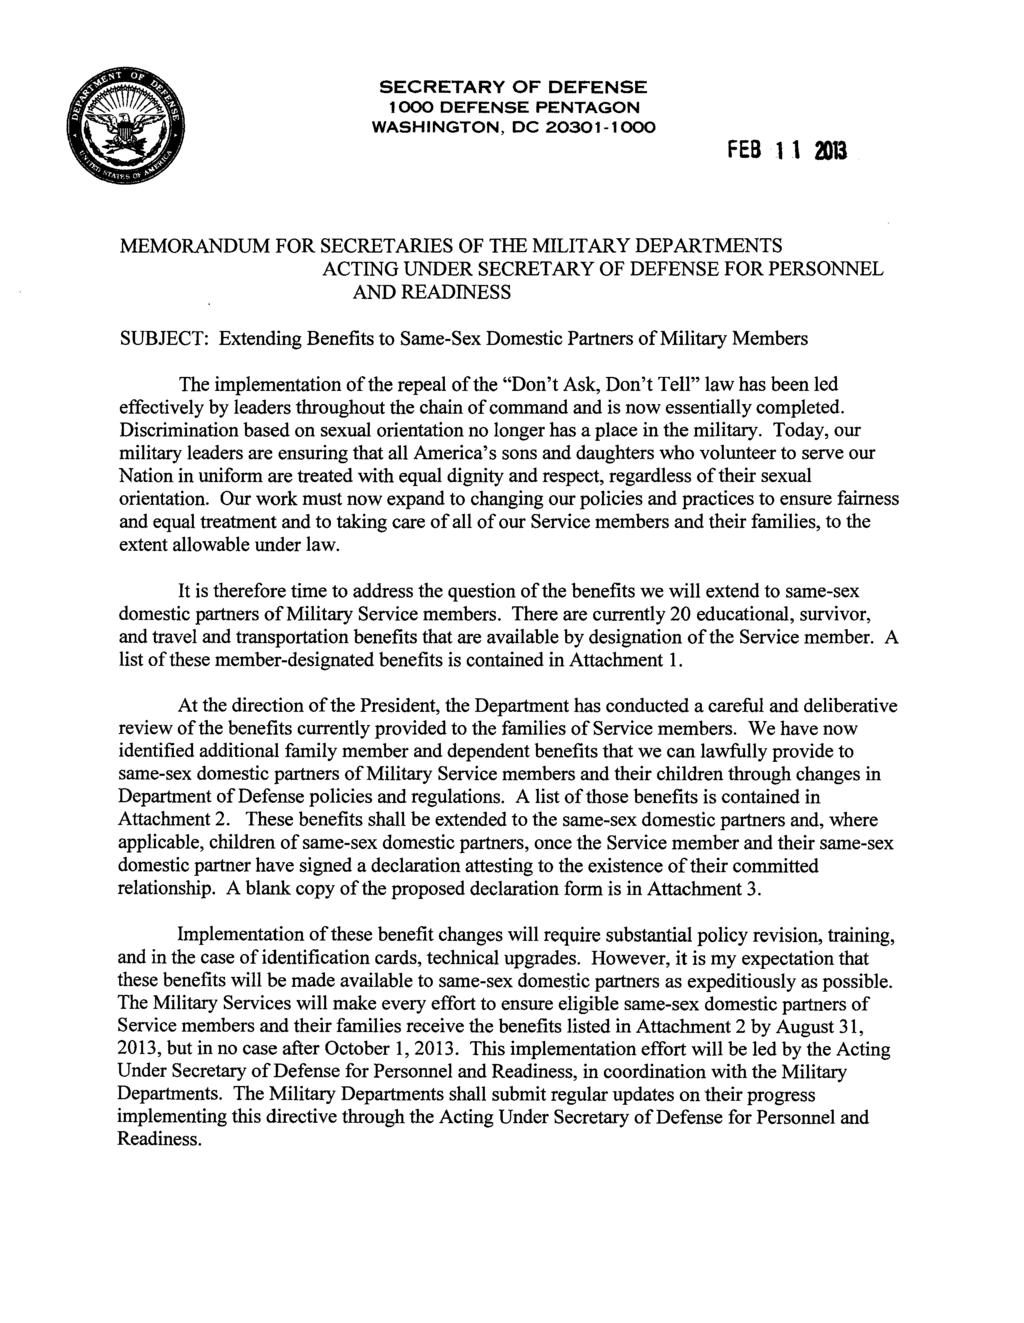 SECRETARY OF DEFENSE 1000 DEFENSE PENTAGON WASHINGTON, DC 20301-1000 FEB 11 2013 MEMORANDUM FOR SECRETARIES OF THE MILITARY DEPARTMENTS ACTING UNDER SECRETARY OF DEFENSE FOR PERSONNEL AND READINESS